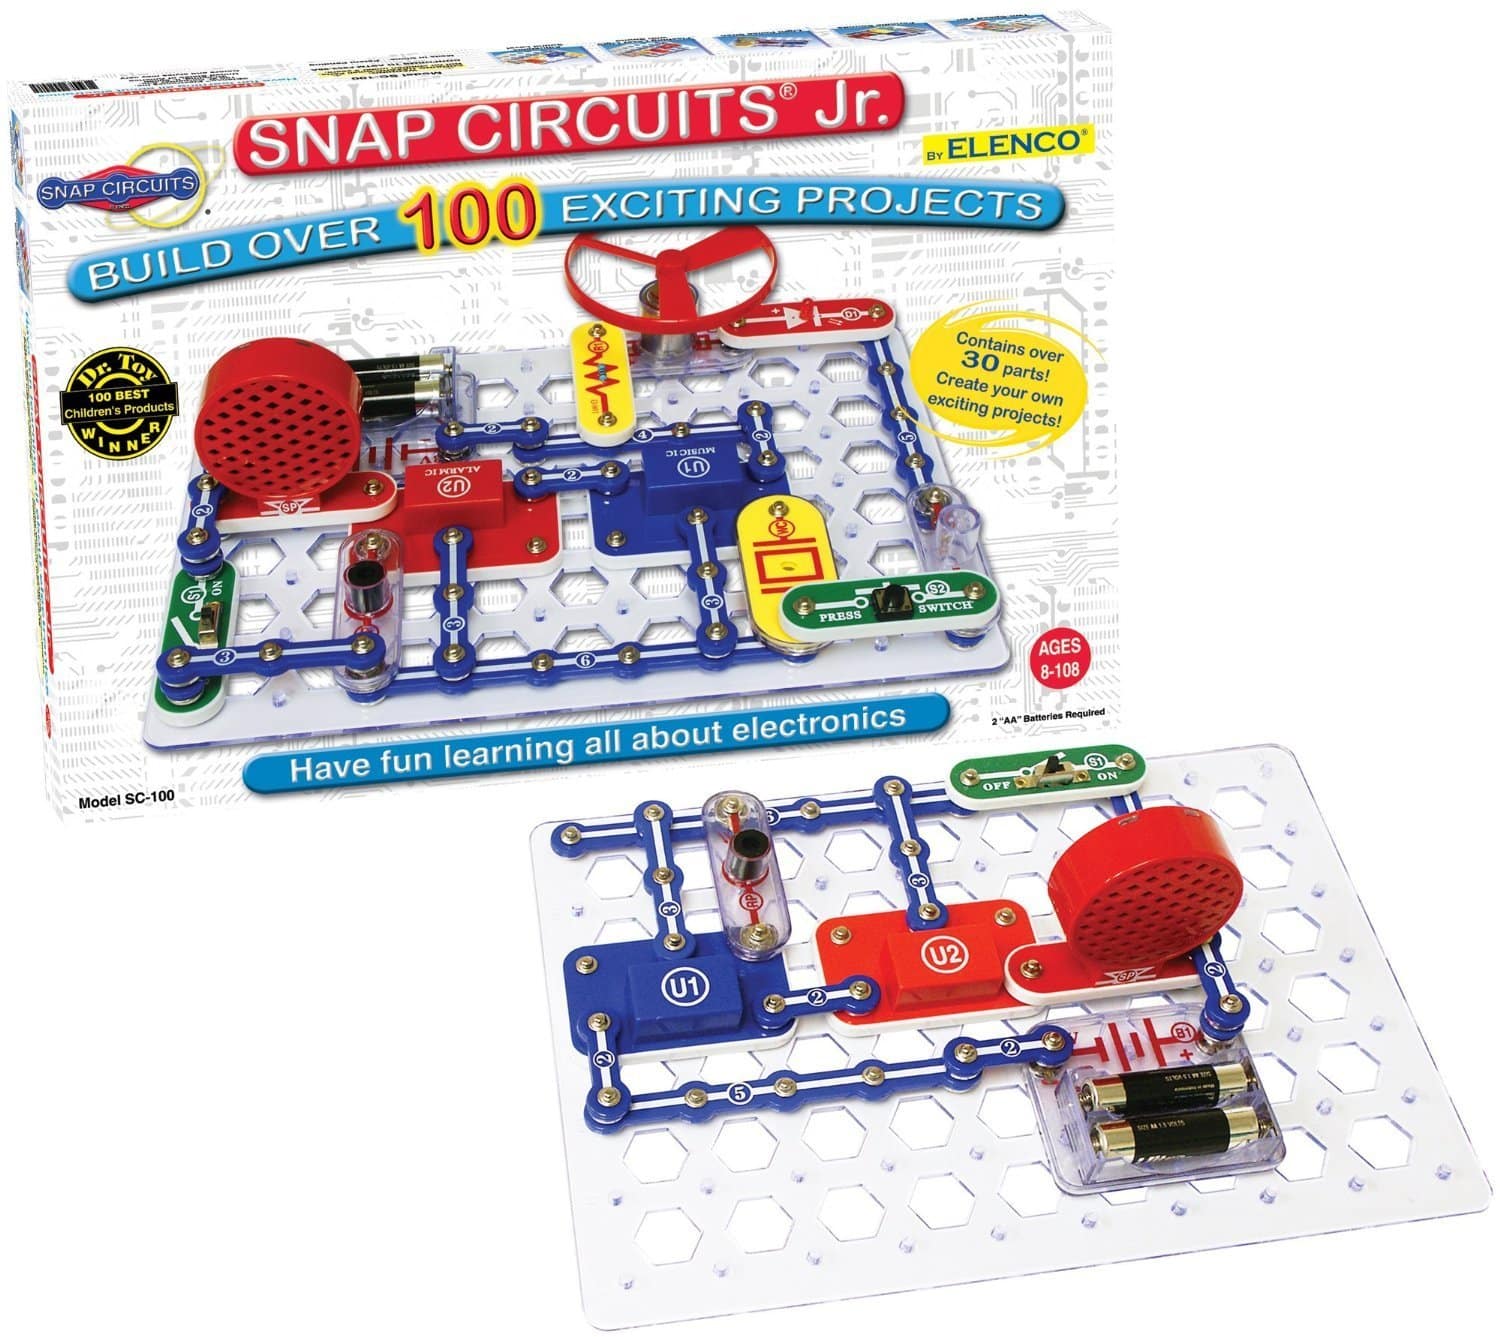 DEAL ALERT: Snap Circuits Jr. SC-100 Electronics Discovery Kit 54% off